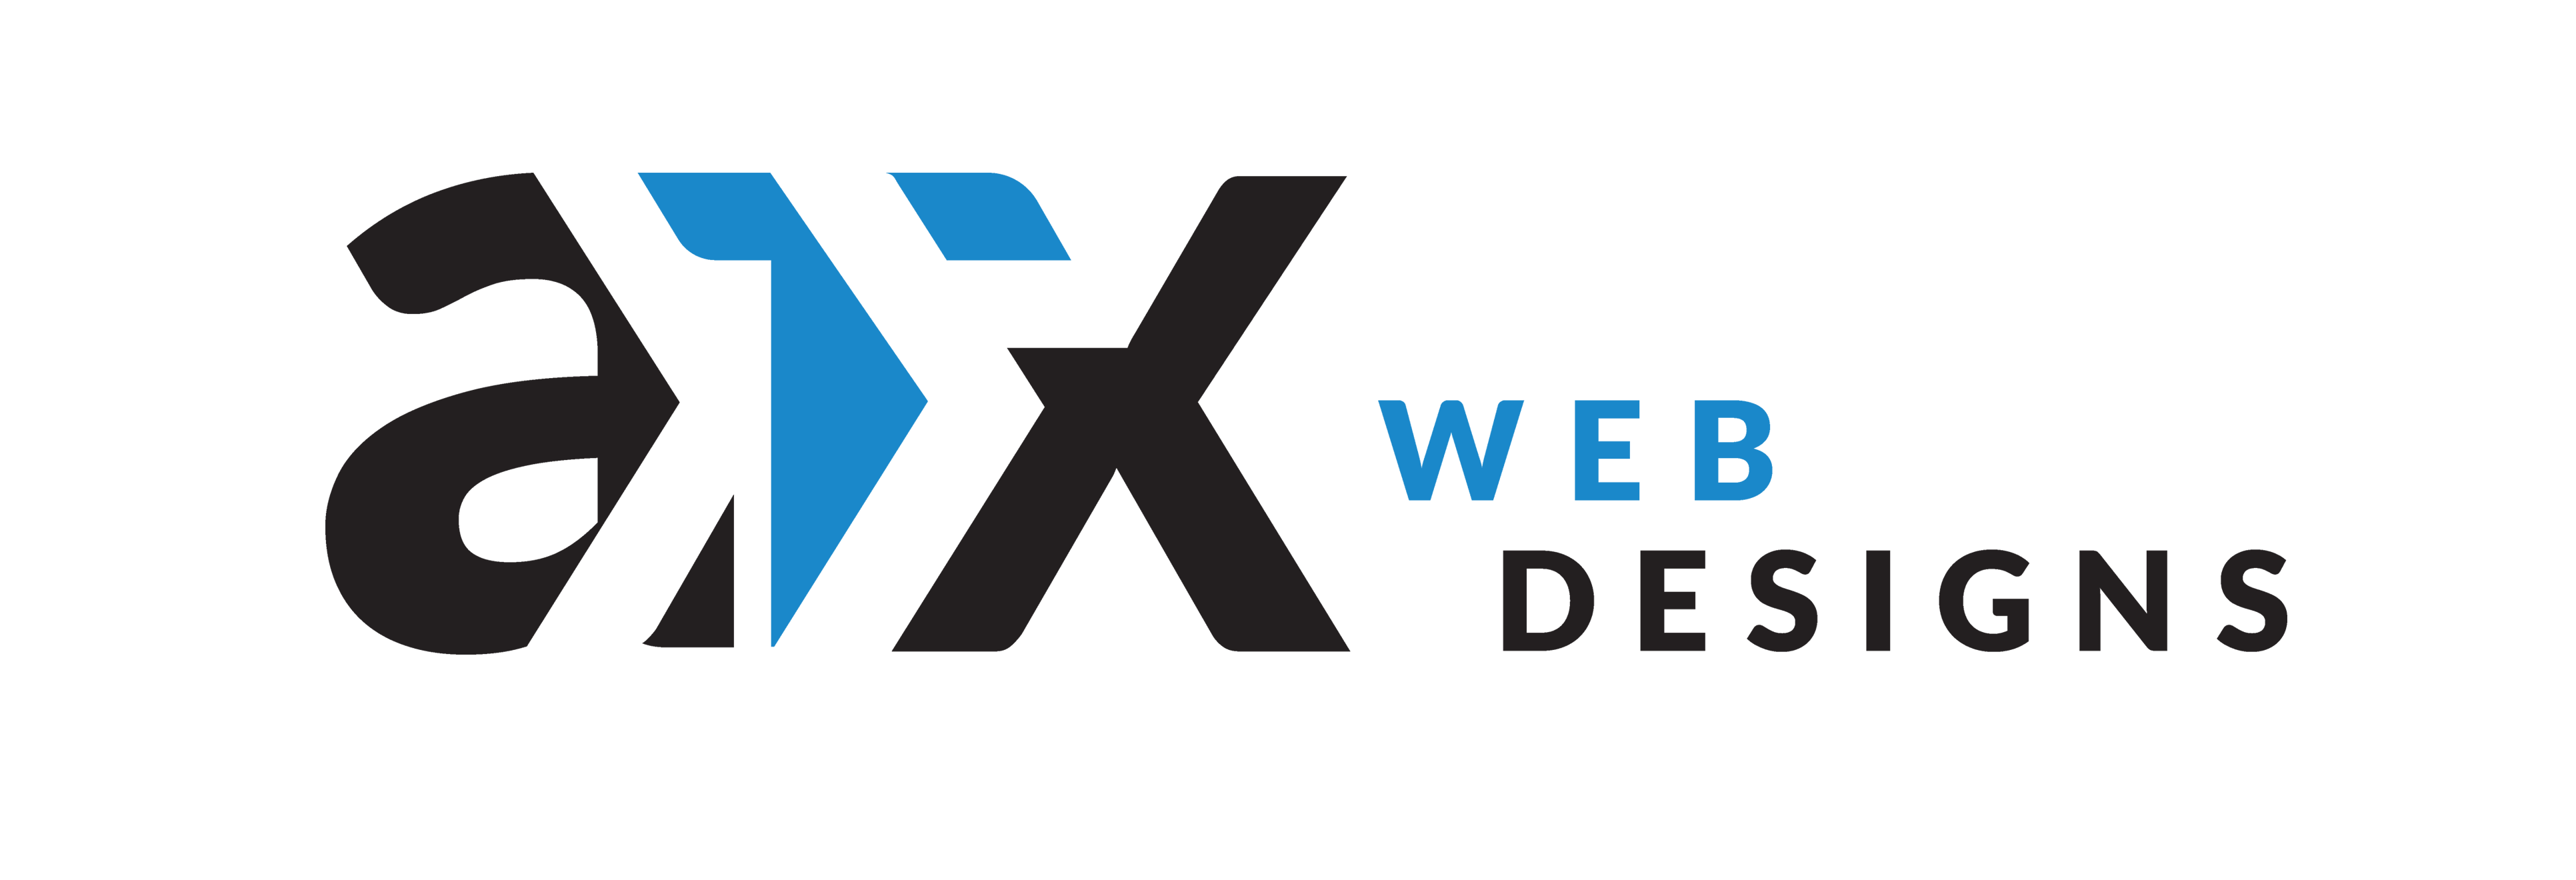 Best Web Design Company Logo: ATX Web Designs